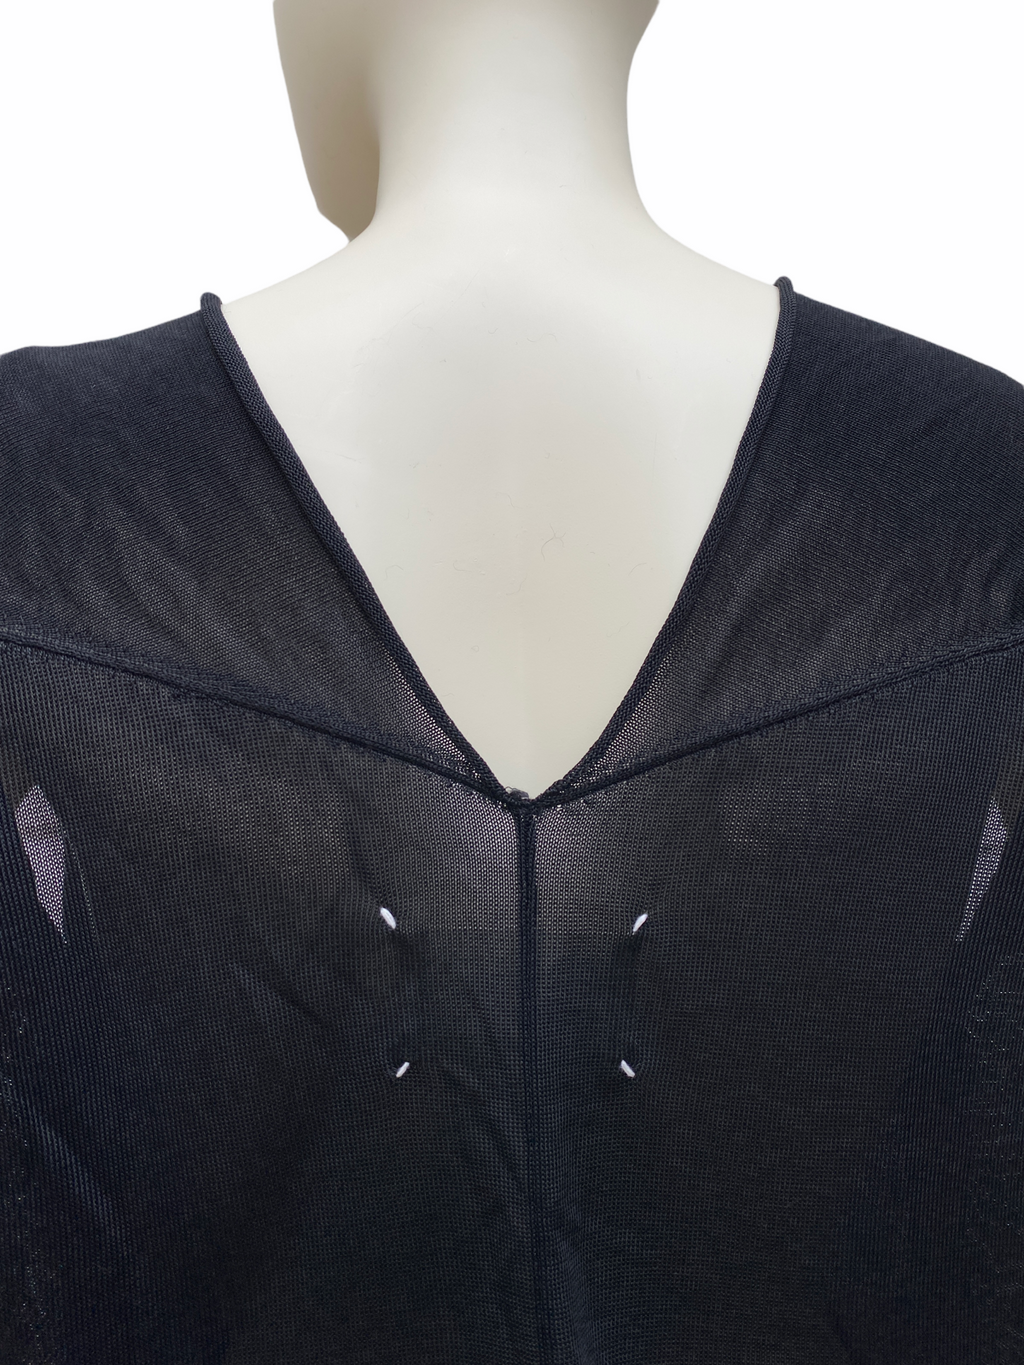 SS 2004 Black side buttons sleeveless sweater